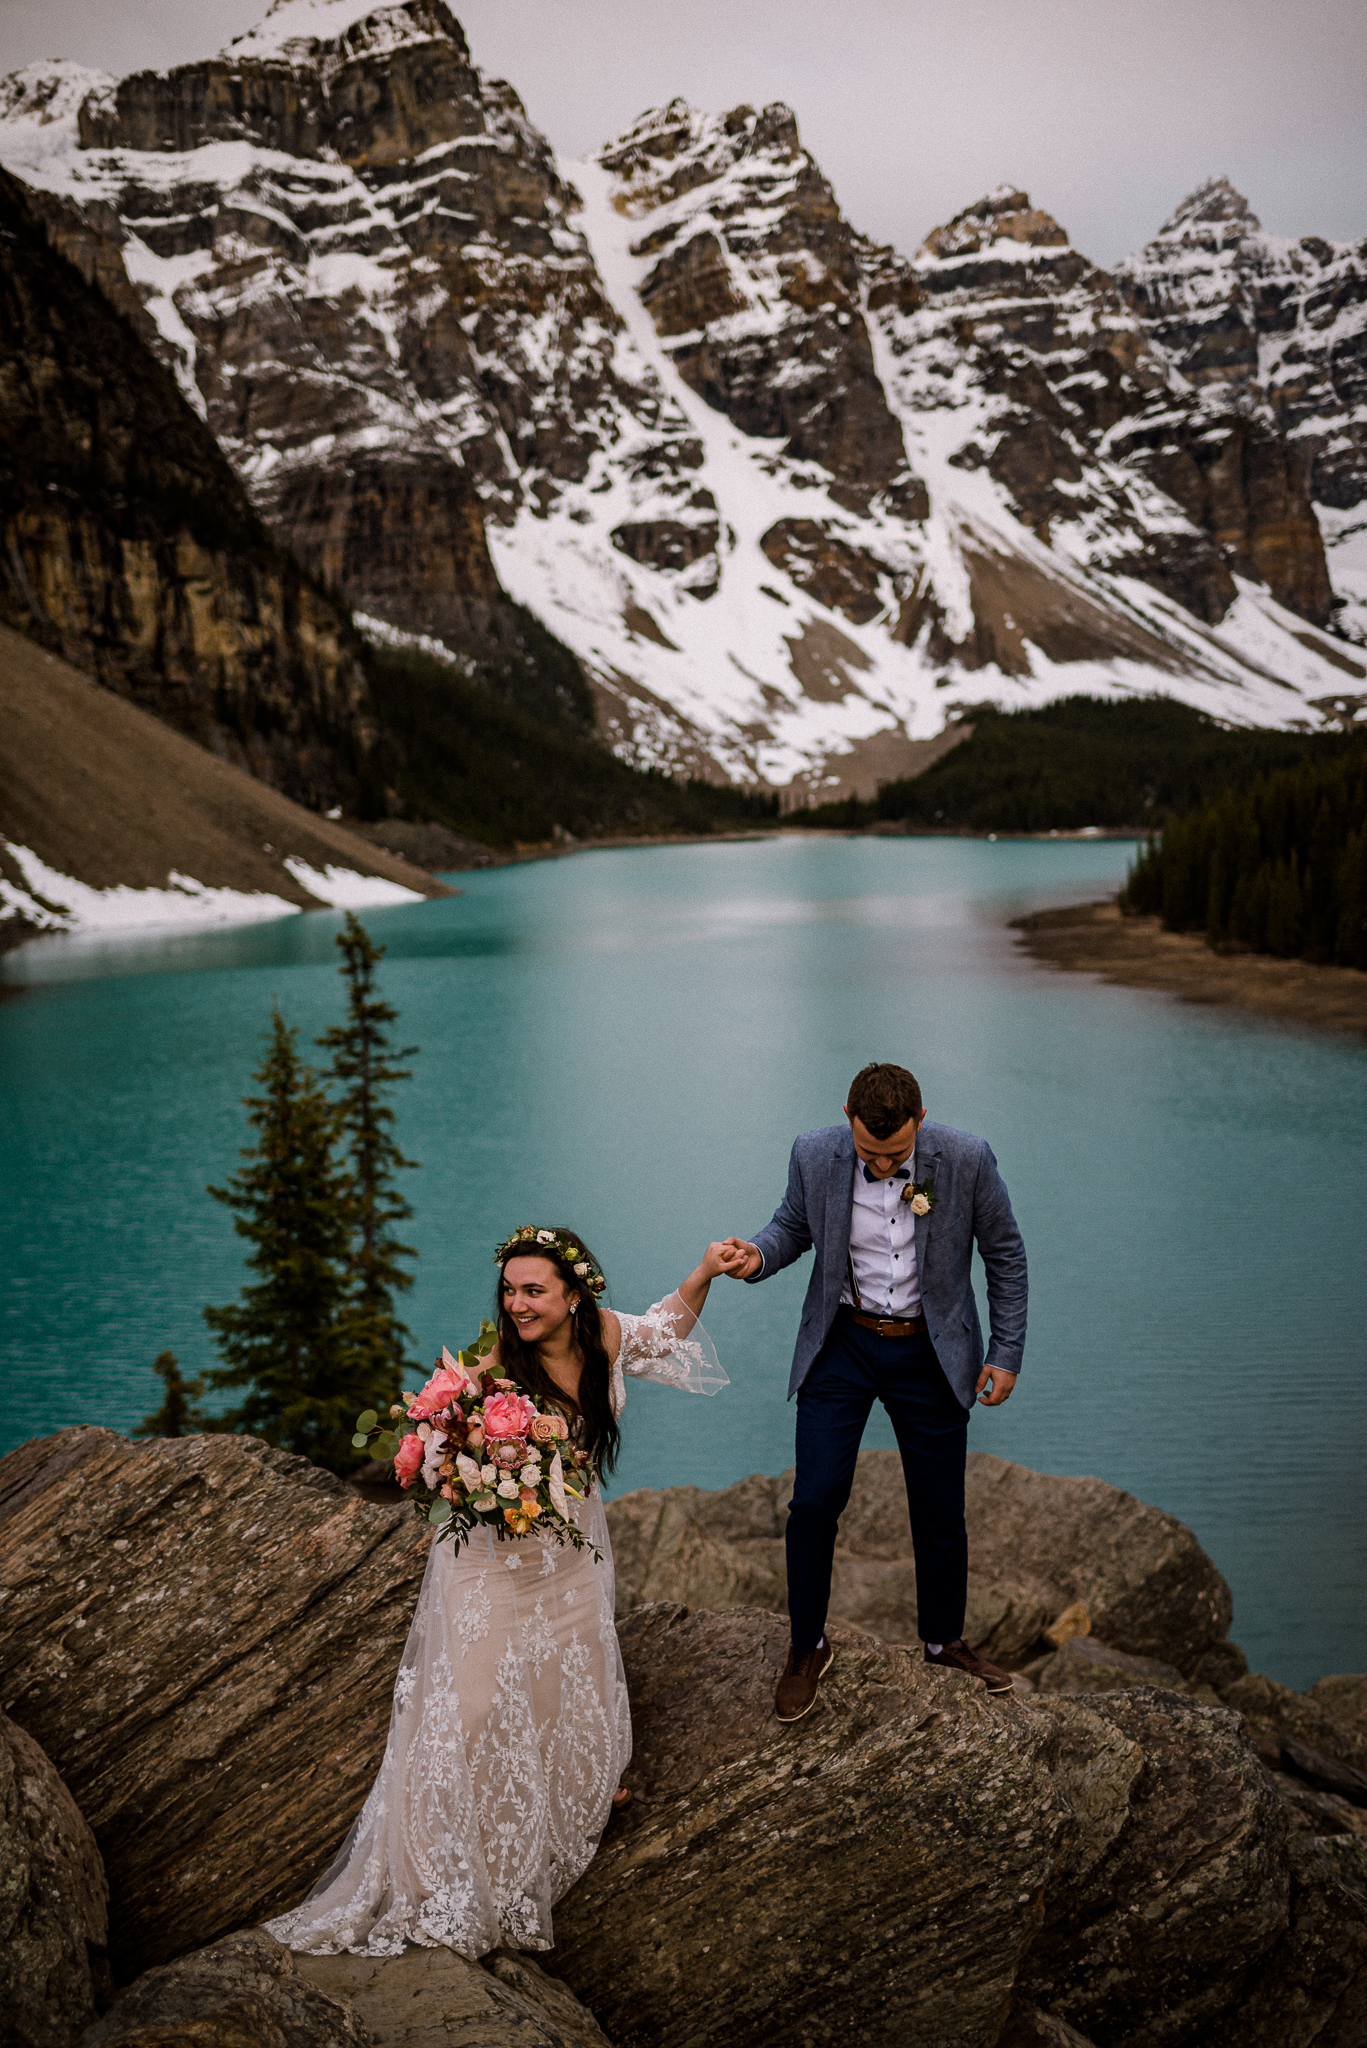 Groom helping bride up on to rock at Moraine Lake, Alberta